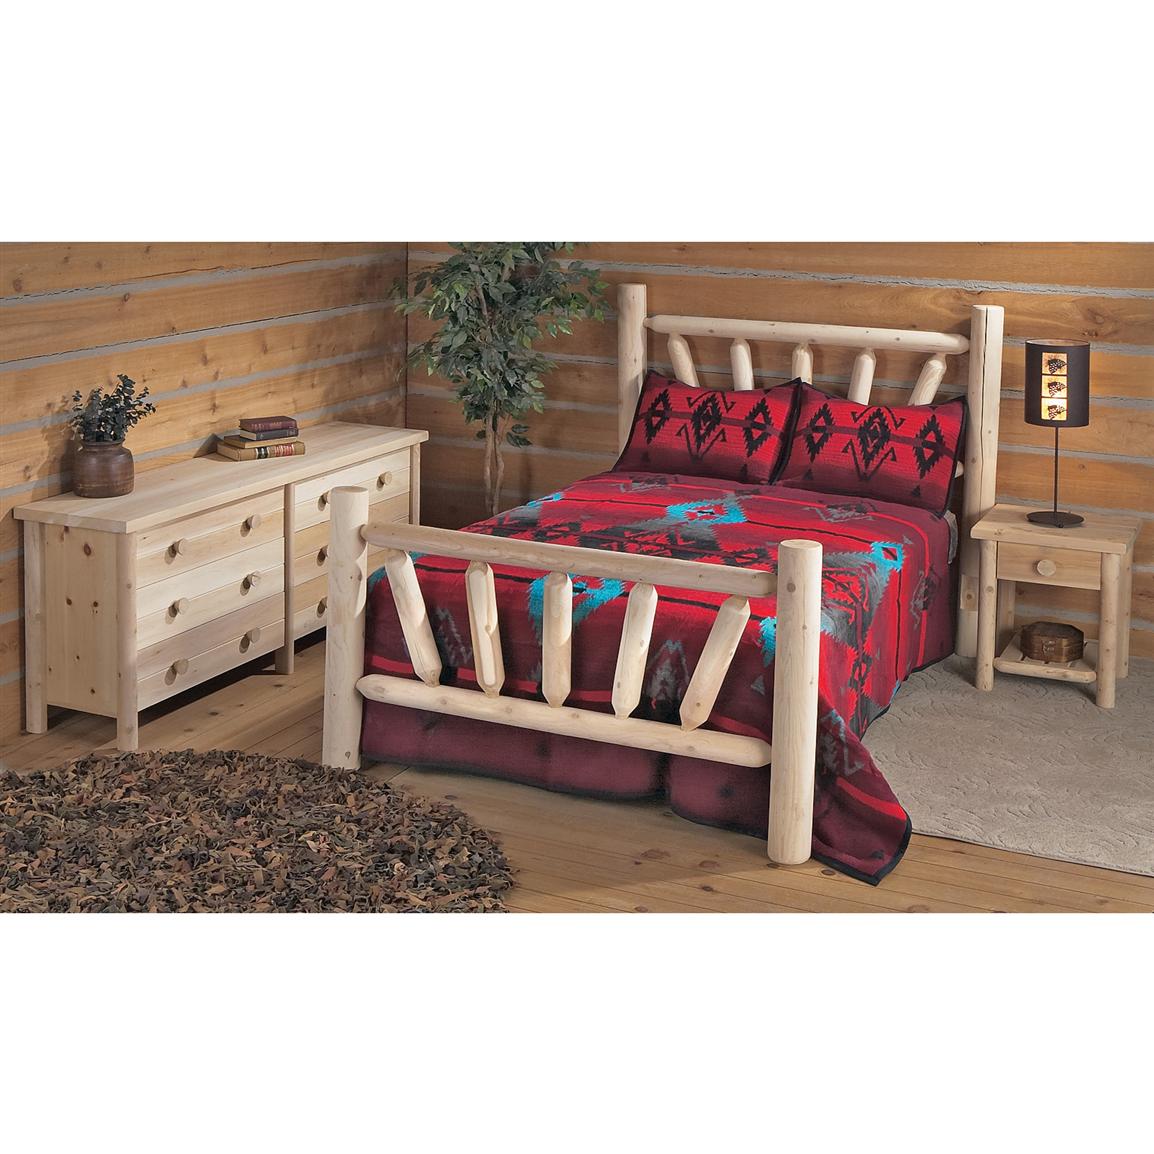 Rustic Natural Cedar Furniture Company King Cedar Log Bed 100591 Bedroom Furniture At Sportsman S Guide